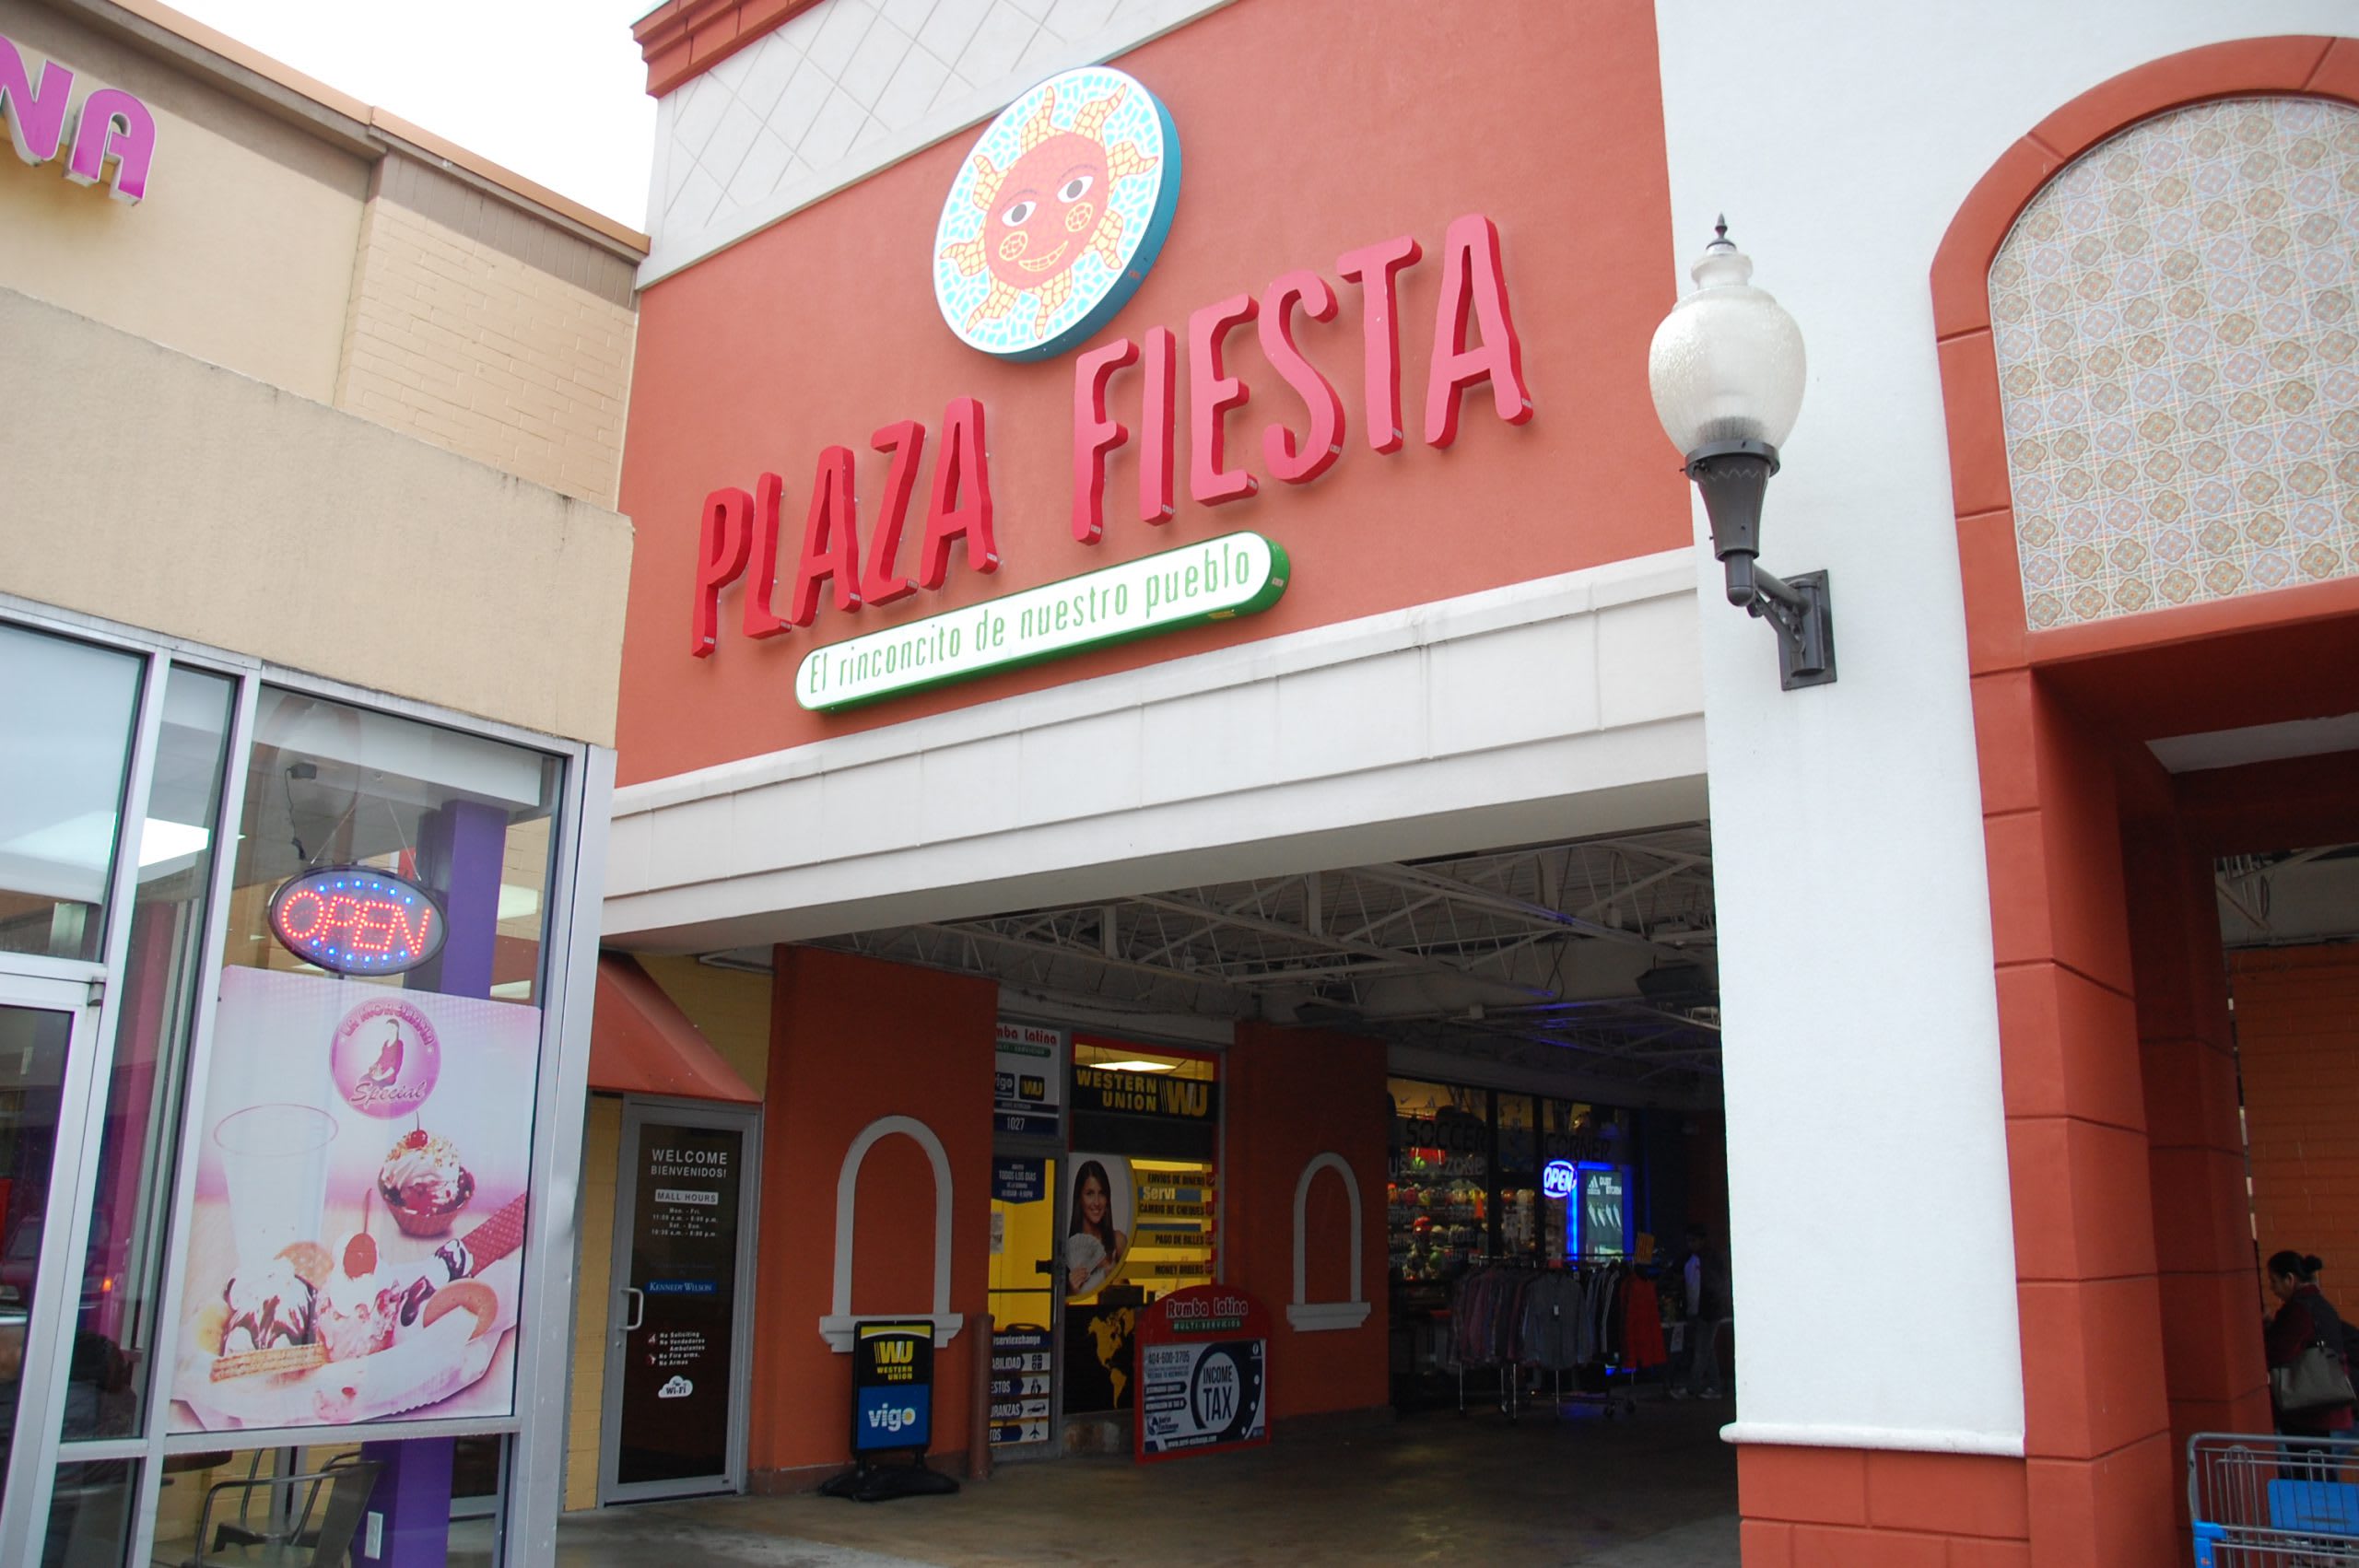 Plaza Fiesta